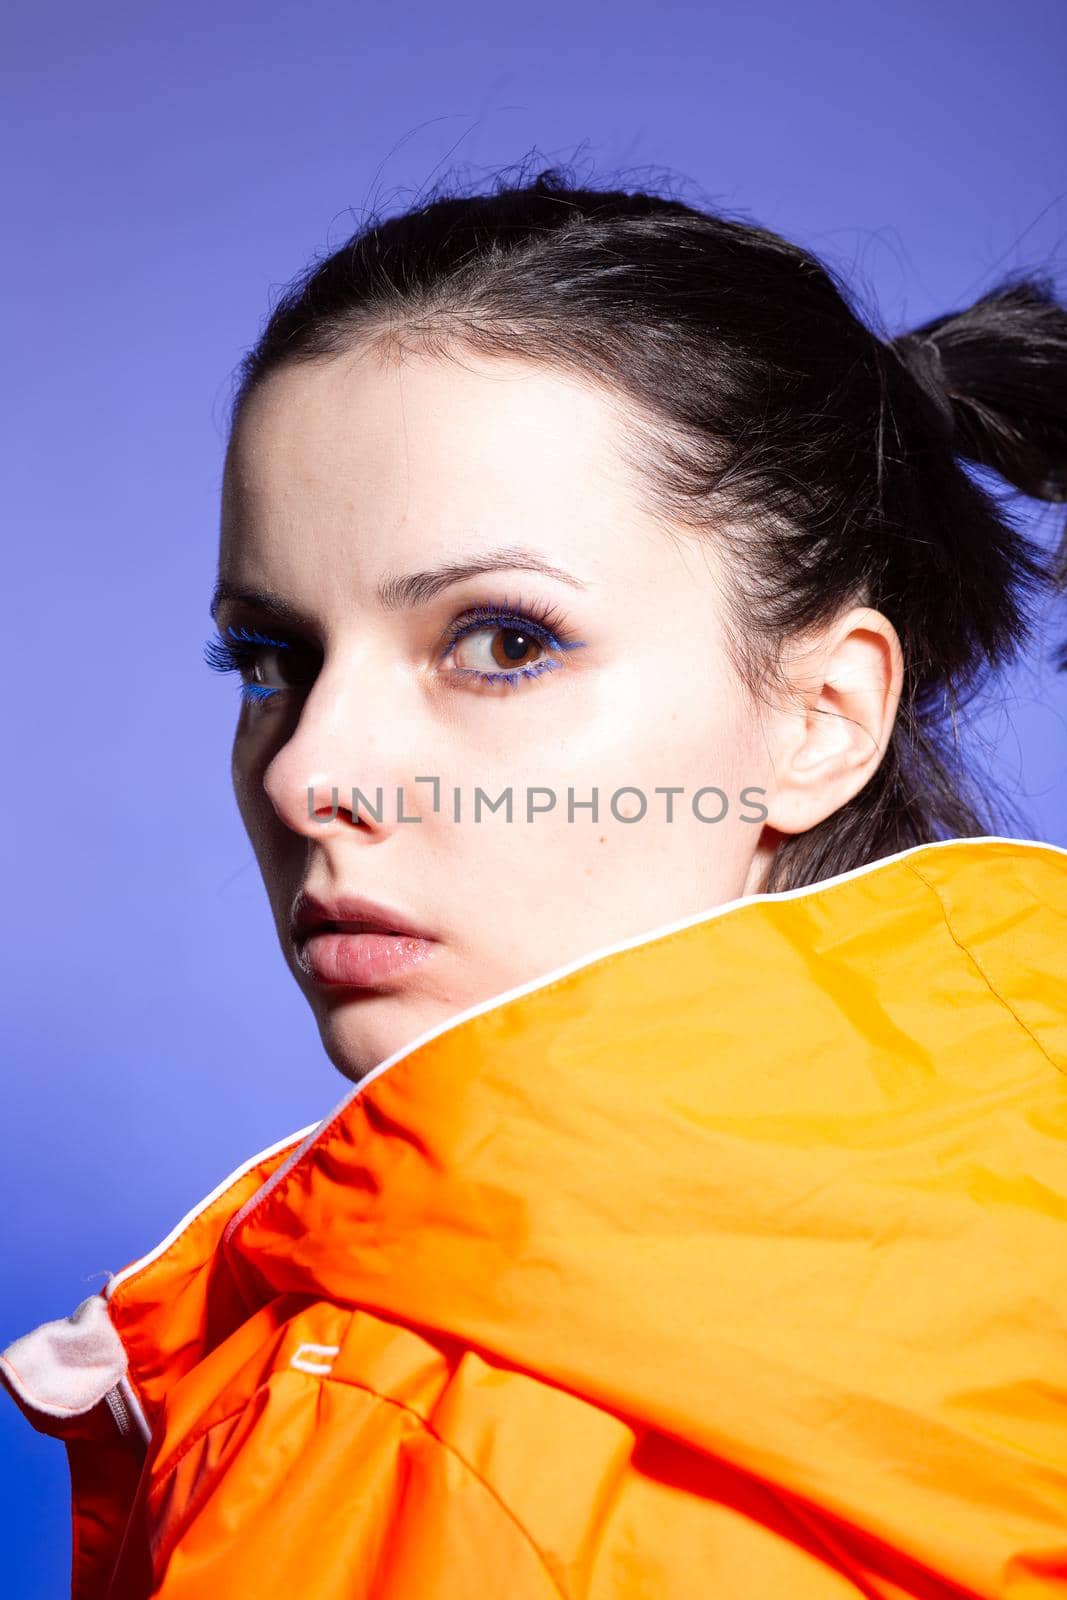 brunette woman in orange jacket, blue background. High quality photo